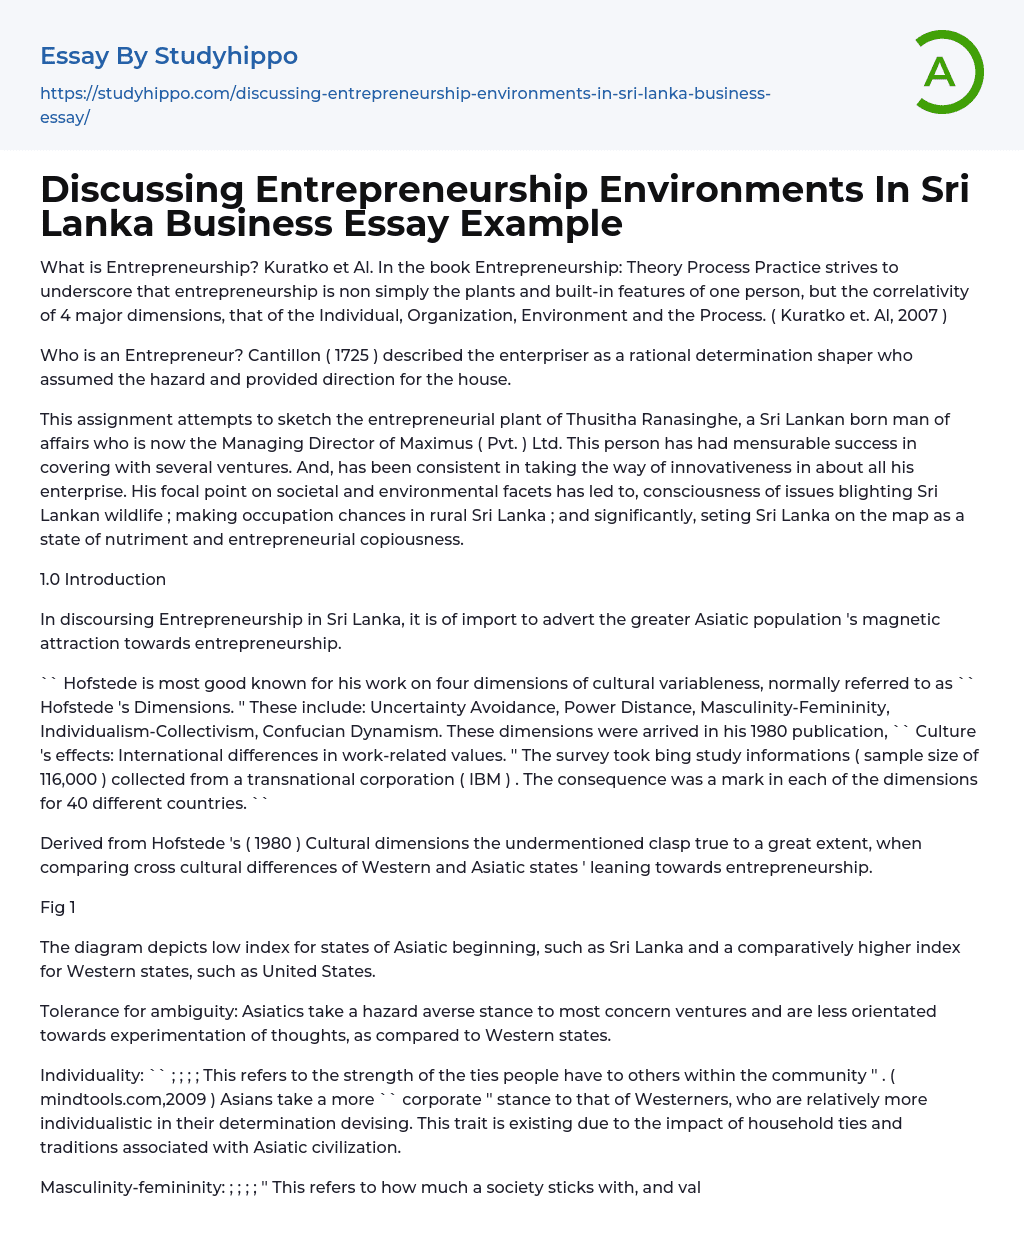 Discussing Entrepreneurship Environments In Sri Lanka Business Essay Example